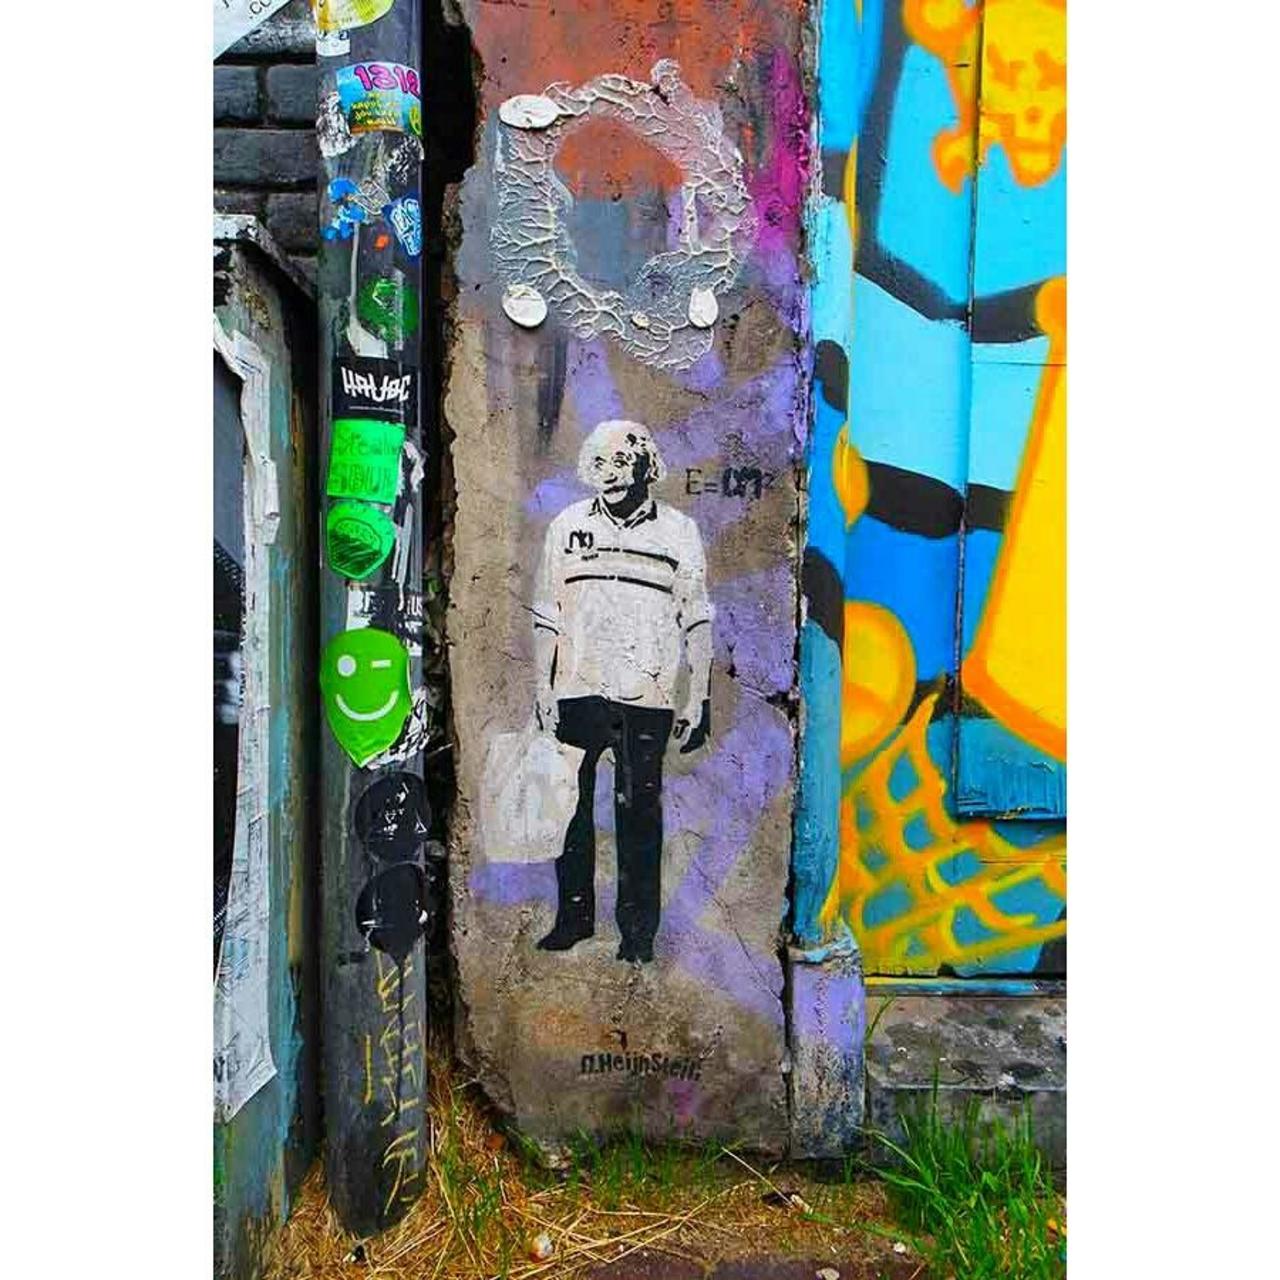 RT @anitadebeijl: Cool #streetart in #amsterdam! #einstein #graffiti #urbanart #art #photooftheday #cityguide #travel http://t.co/2oEAgFrpdh